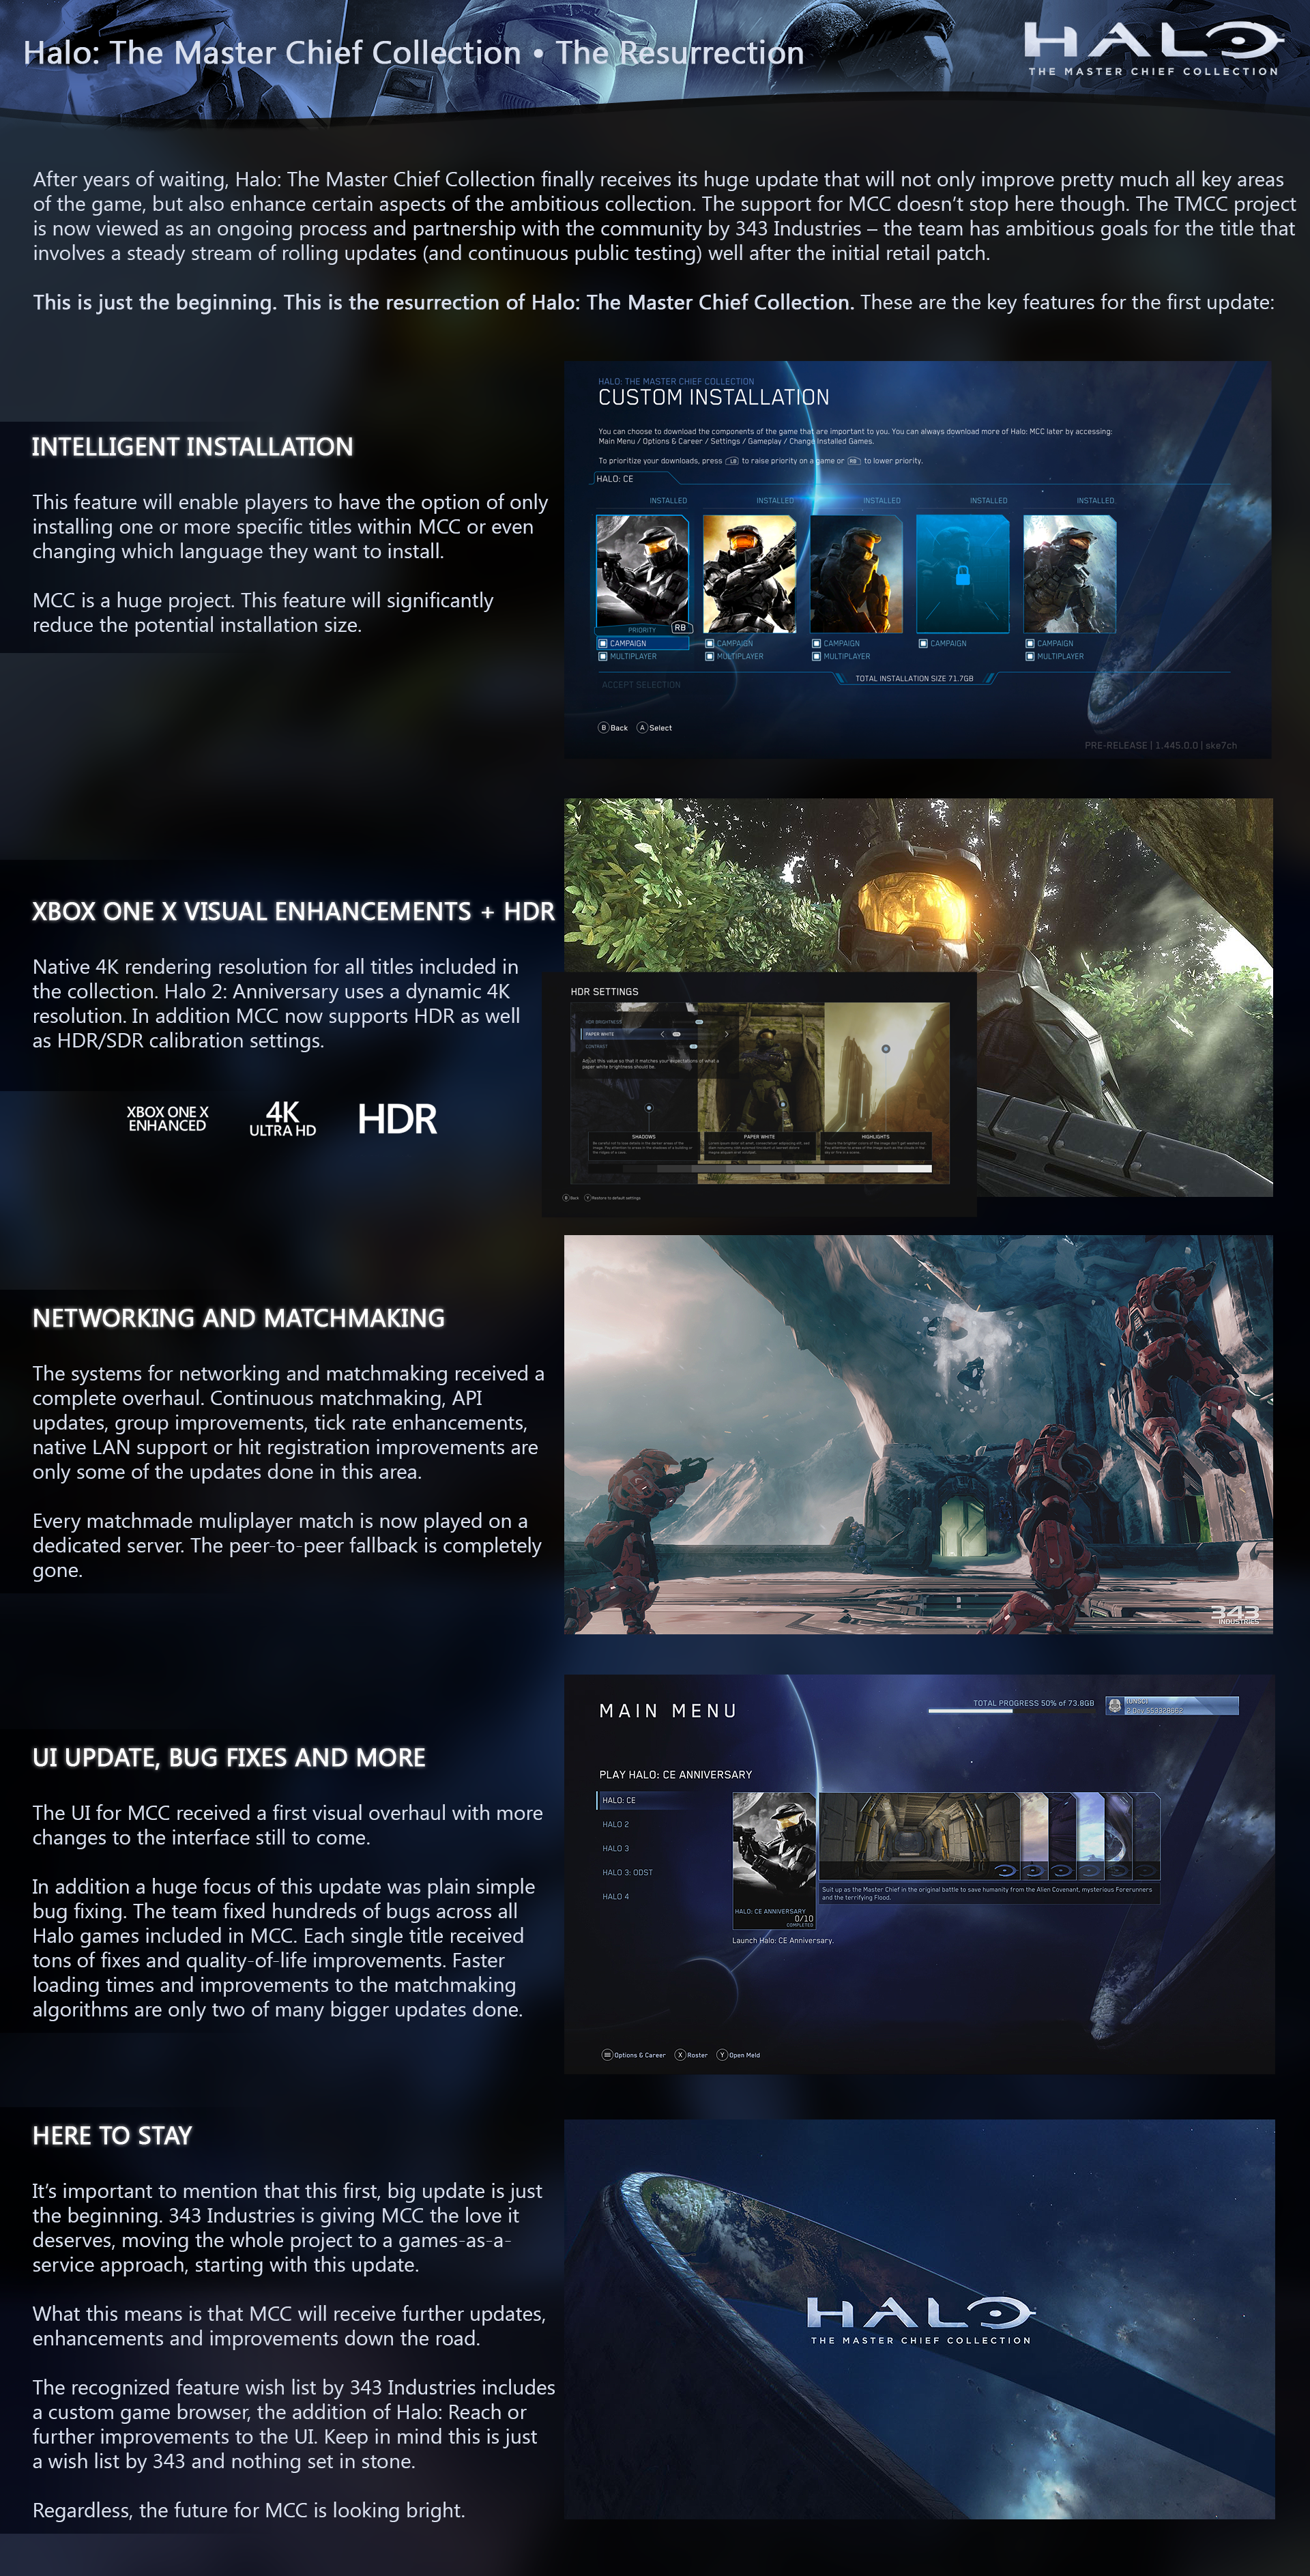 Halo 2 matchmaking update